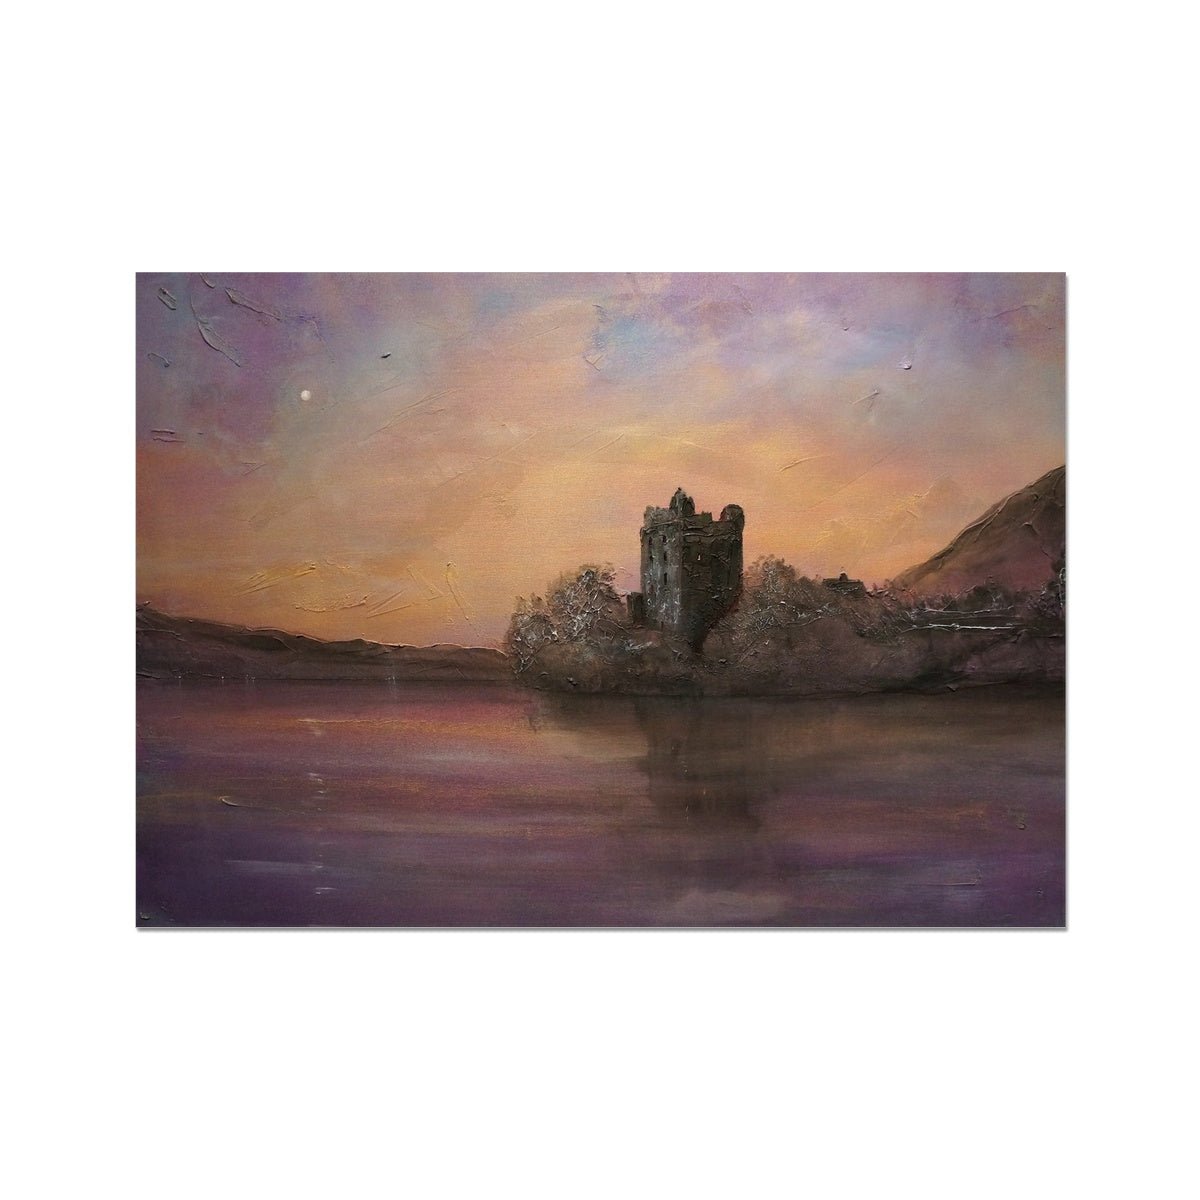 Urquhart Castle Moonlight Painting | Fine Art Prints From Scotland-Unframed Prints-Historic & Iconic Scotland Art Gallery-A2 Landscape-Paintings, Prints, Homeware, Art Gifts From Scotland By Scottish Artist Kevin Hunter